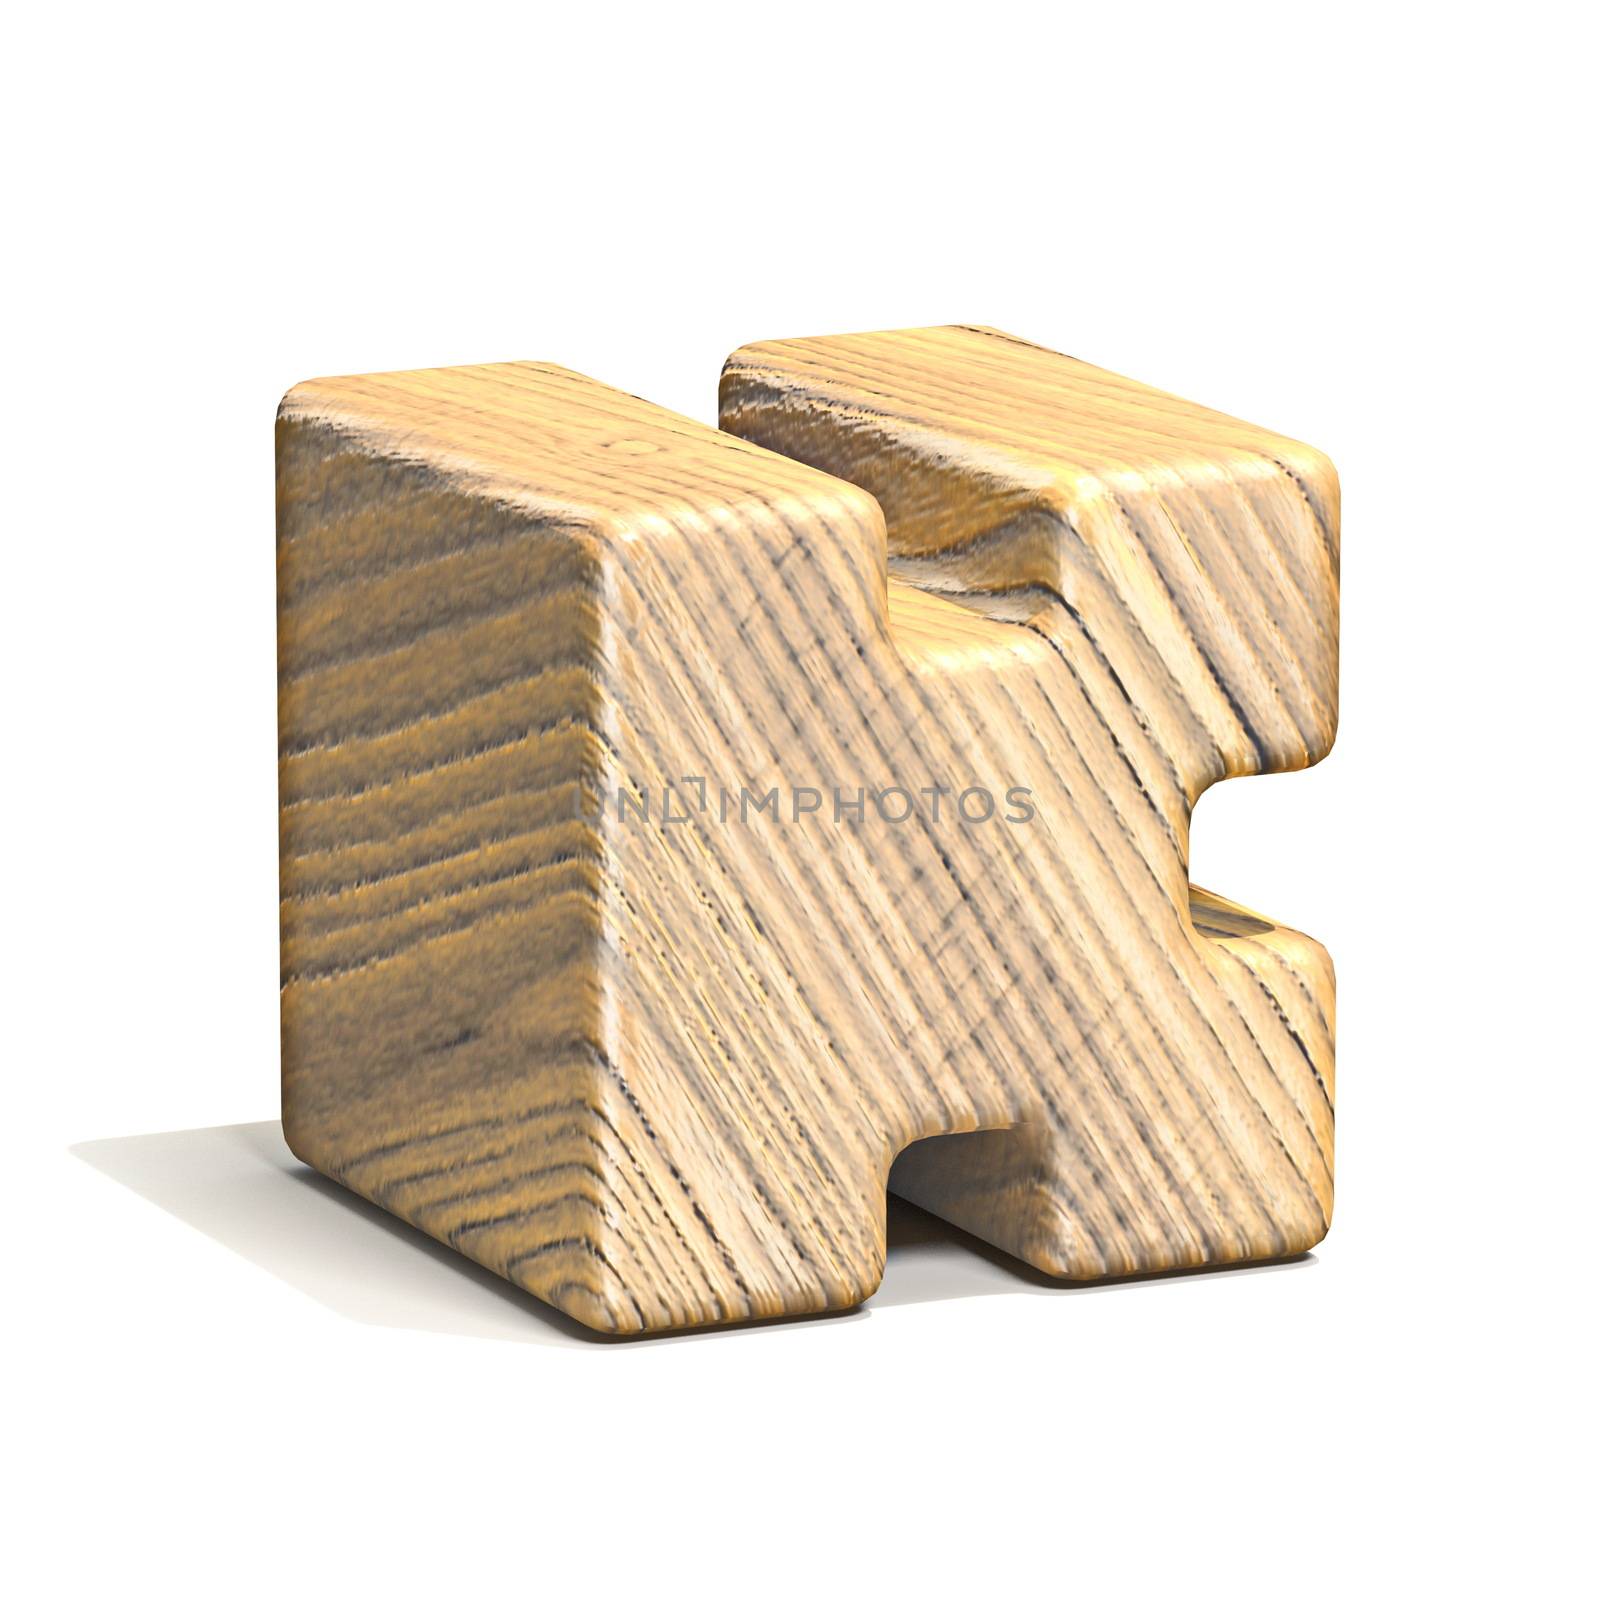 Solid wooden cube font Letter K 3D render illustration isolated on white background